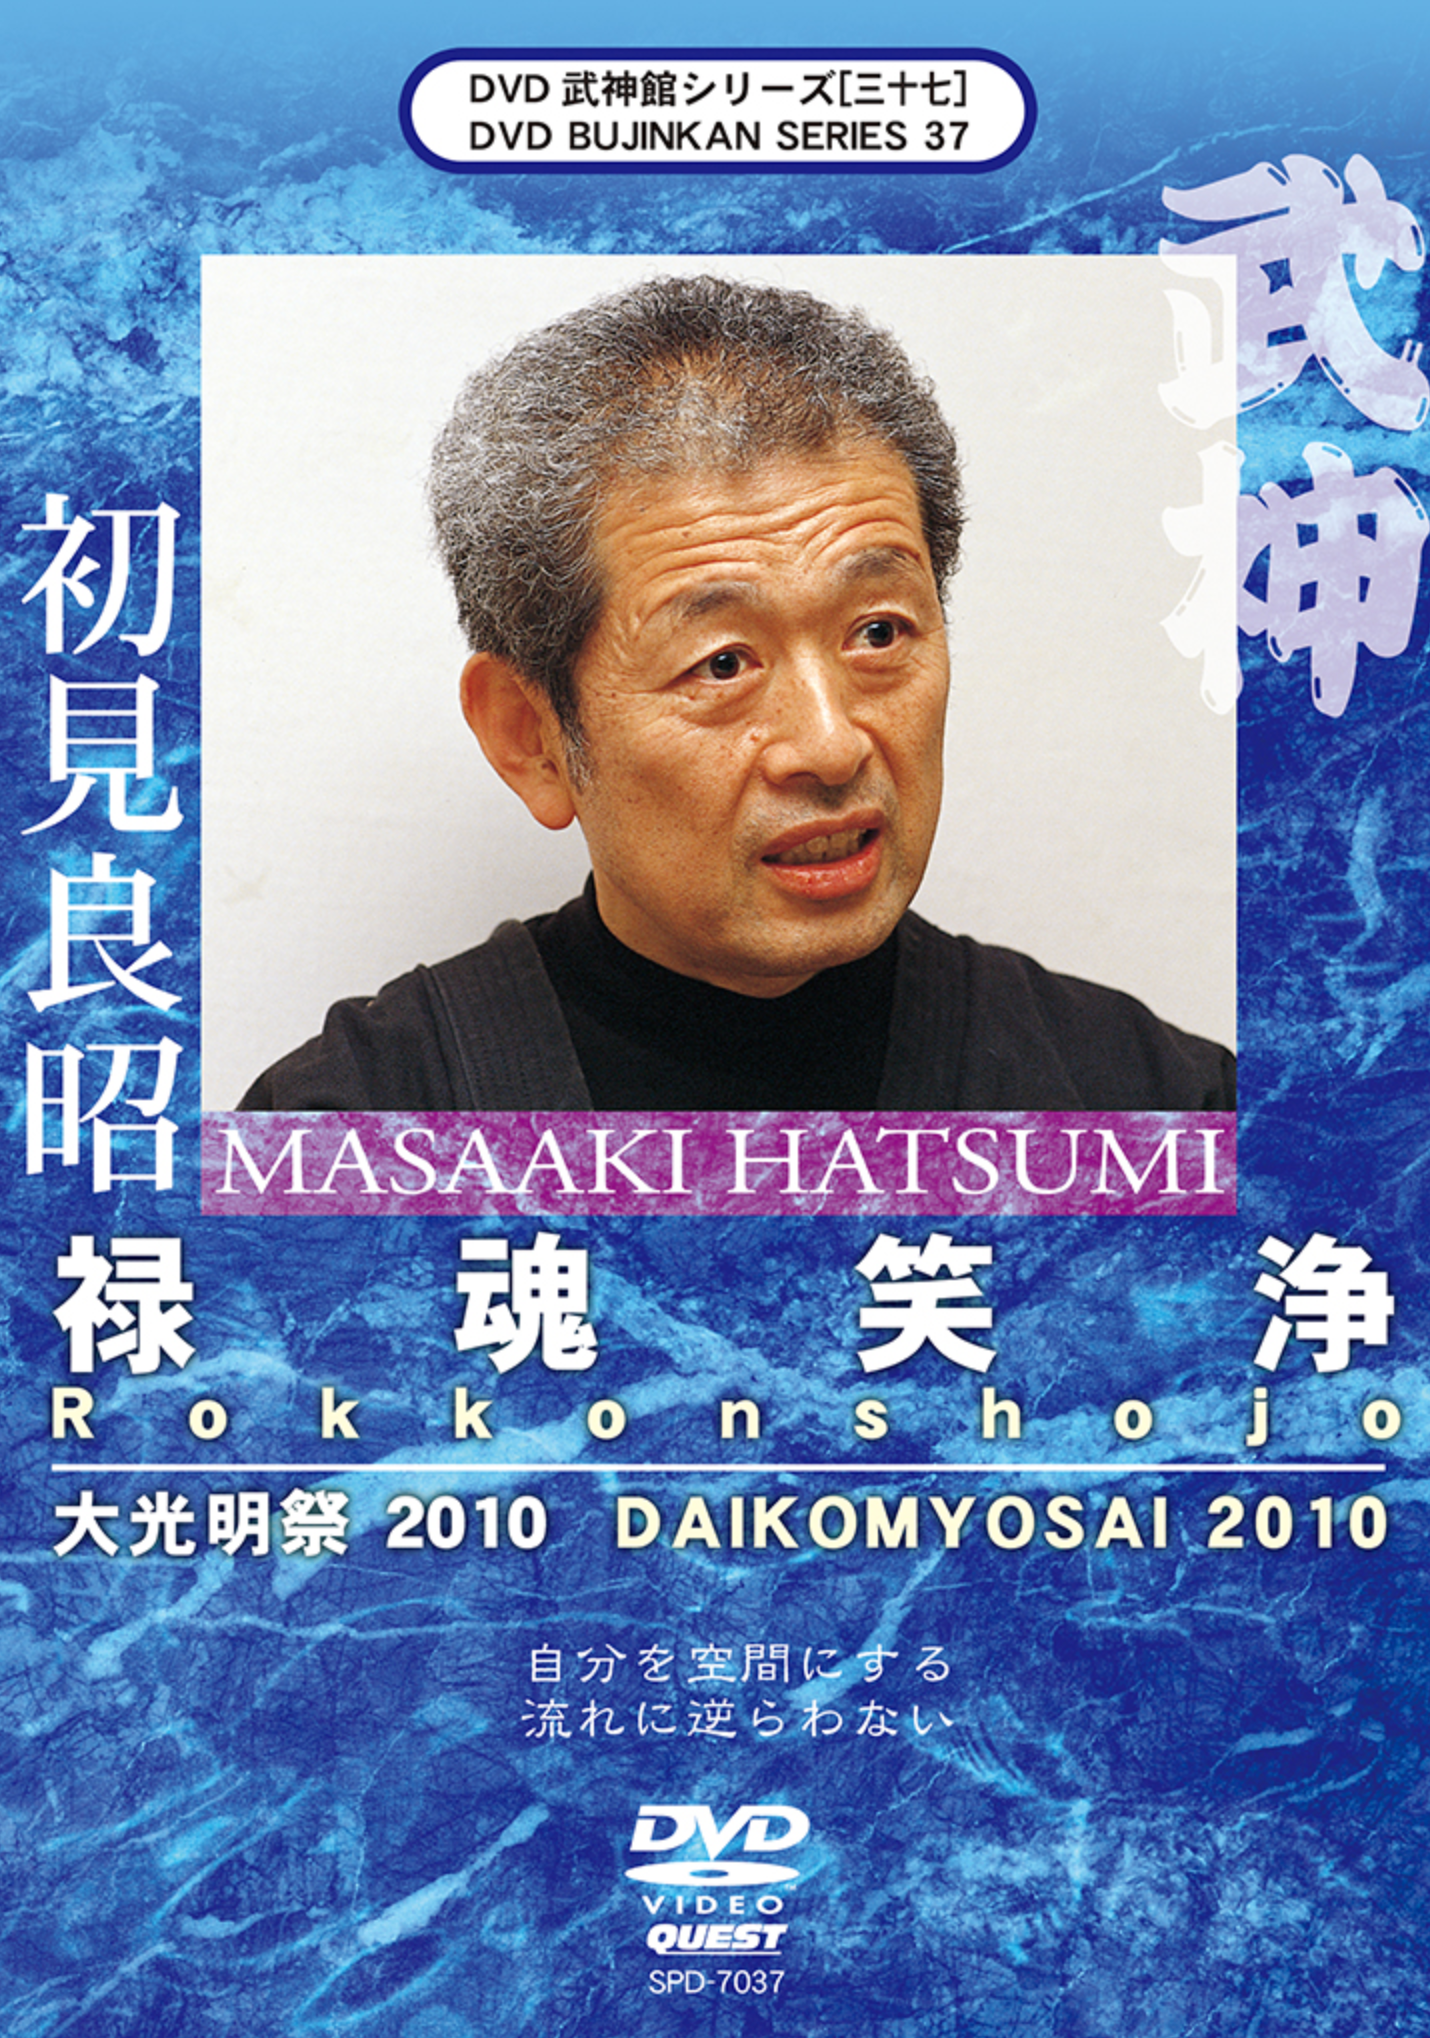 Bujinkan DVD Series 37: Rokkon Shojo with Masaaki Hatsumi - Budovideos Inc